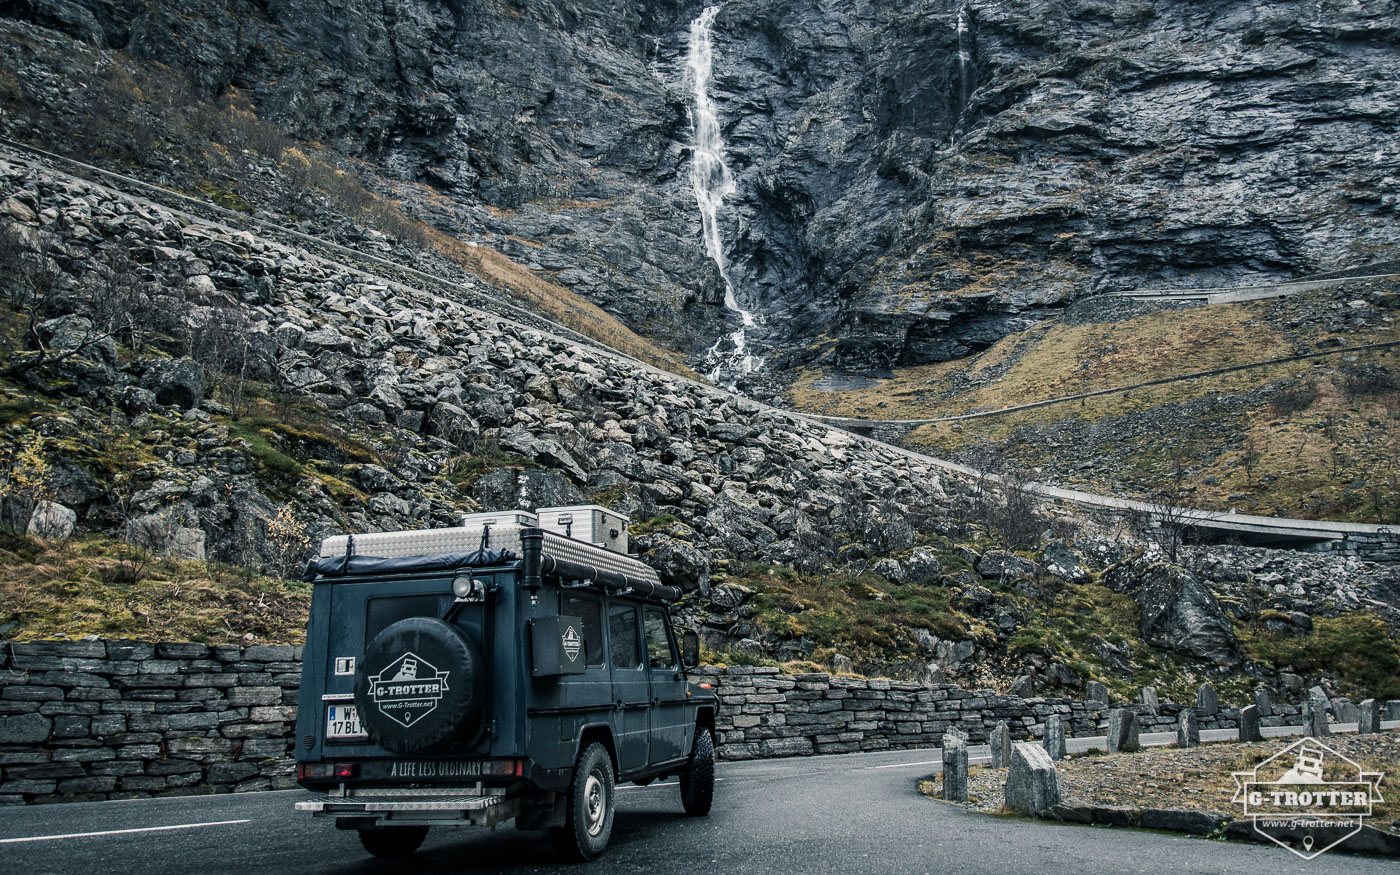 If you drive Trollstigen, you also pass some waterfalls.